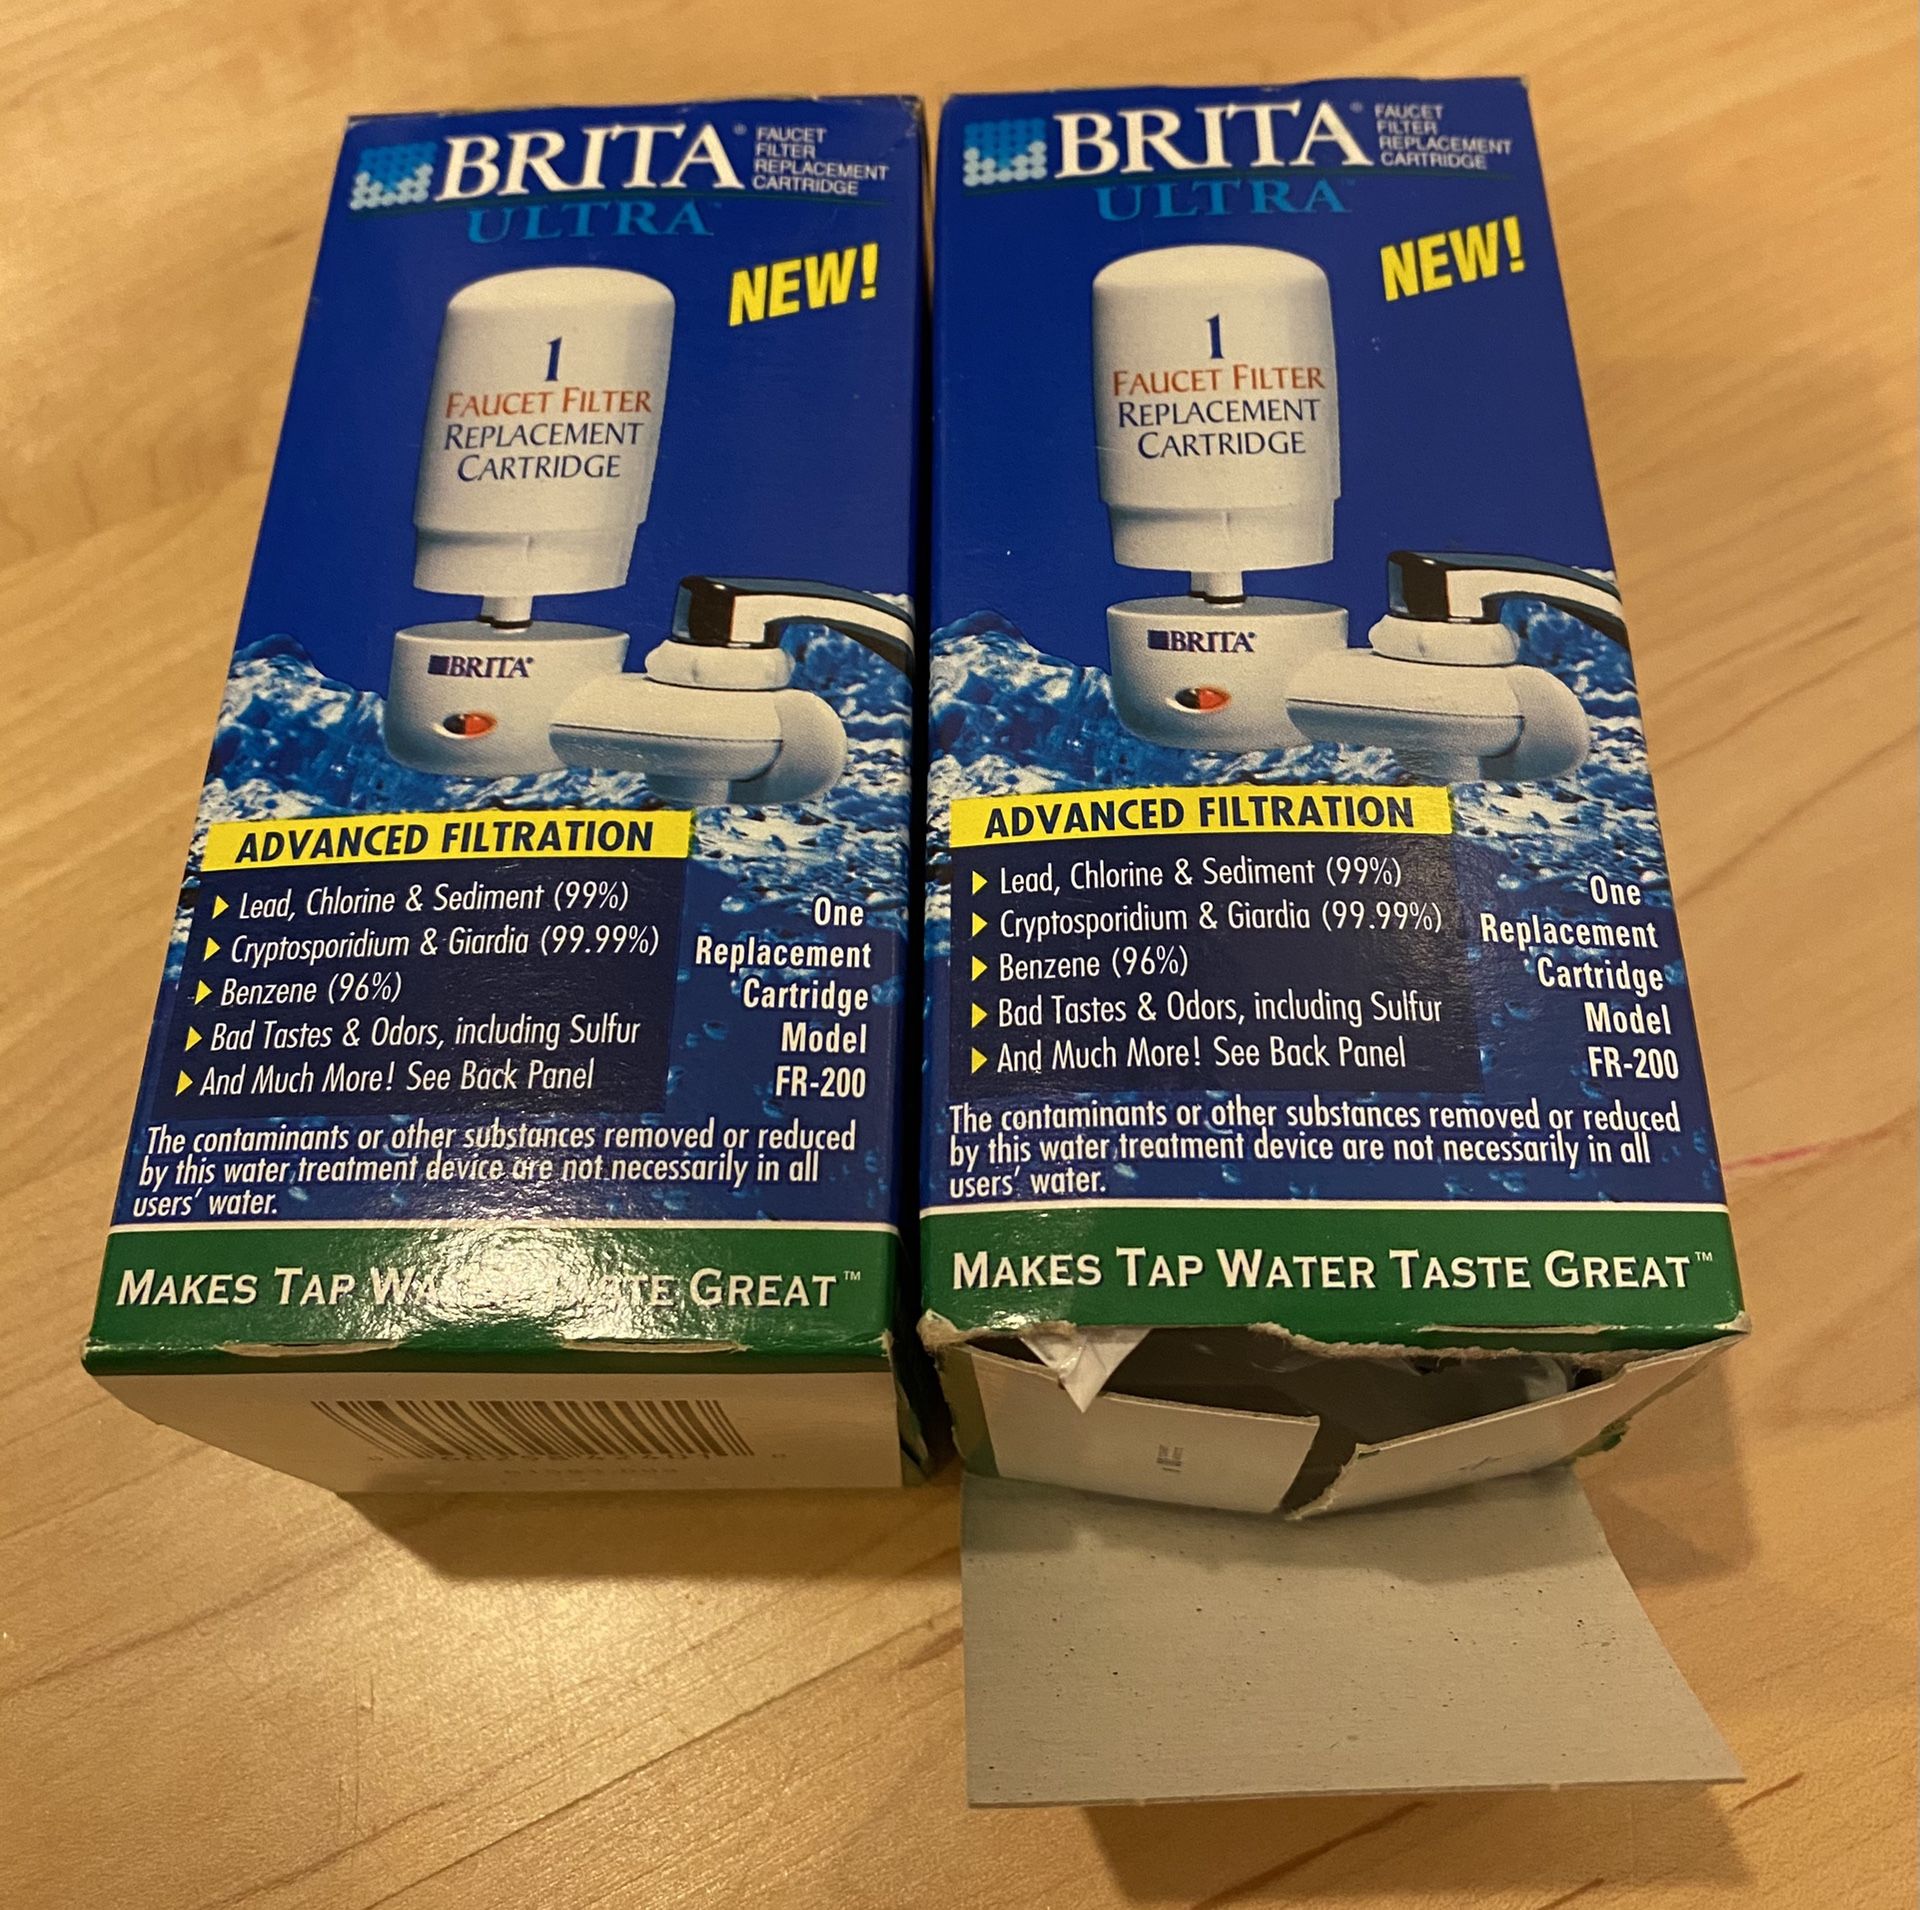 Brita ultra faucet filter replacement cartridge - 3 packages